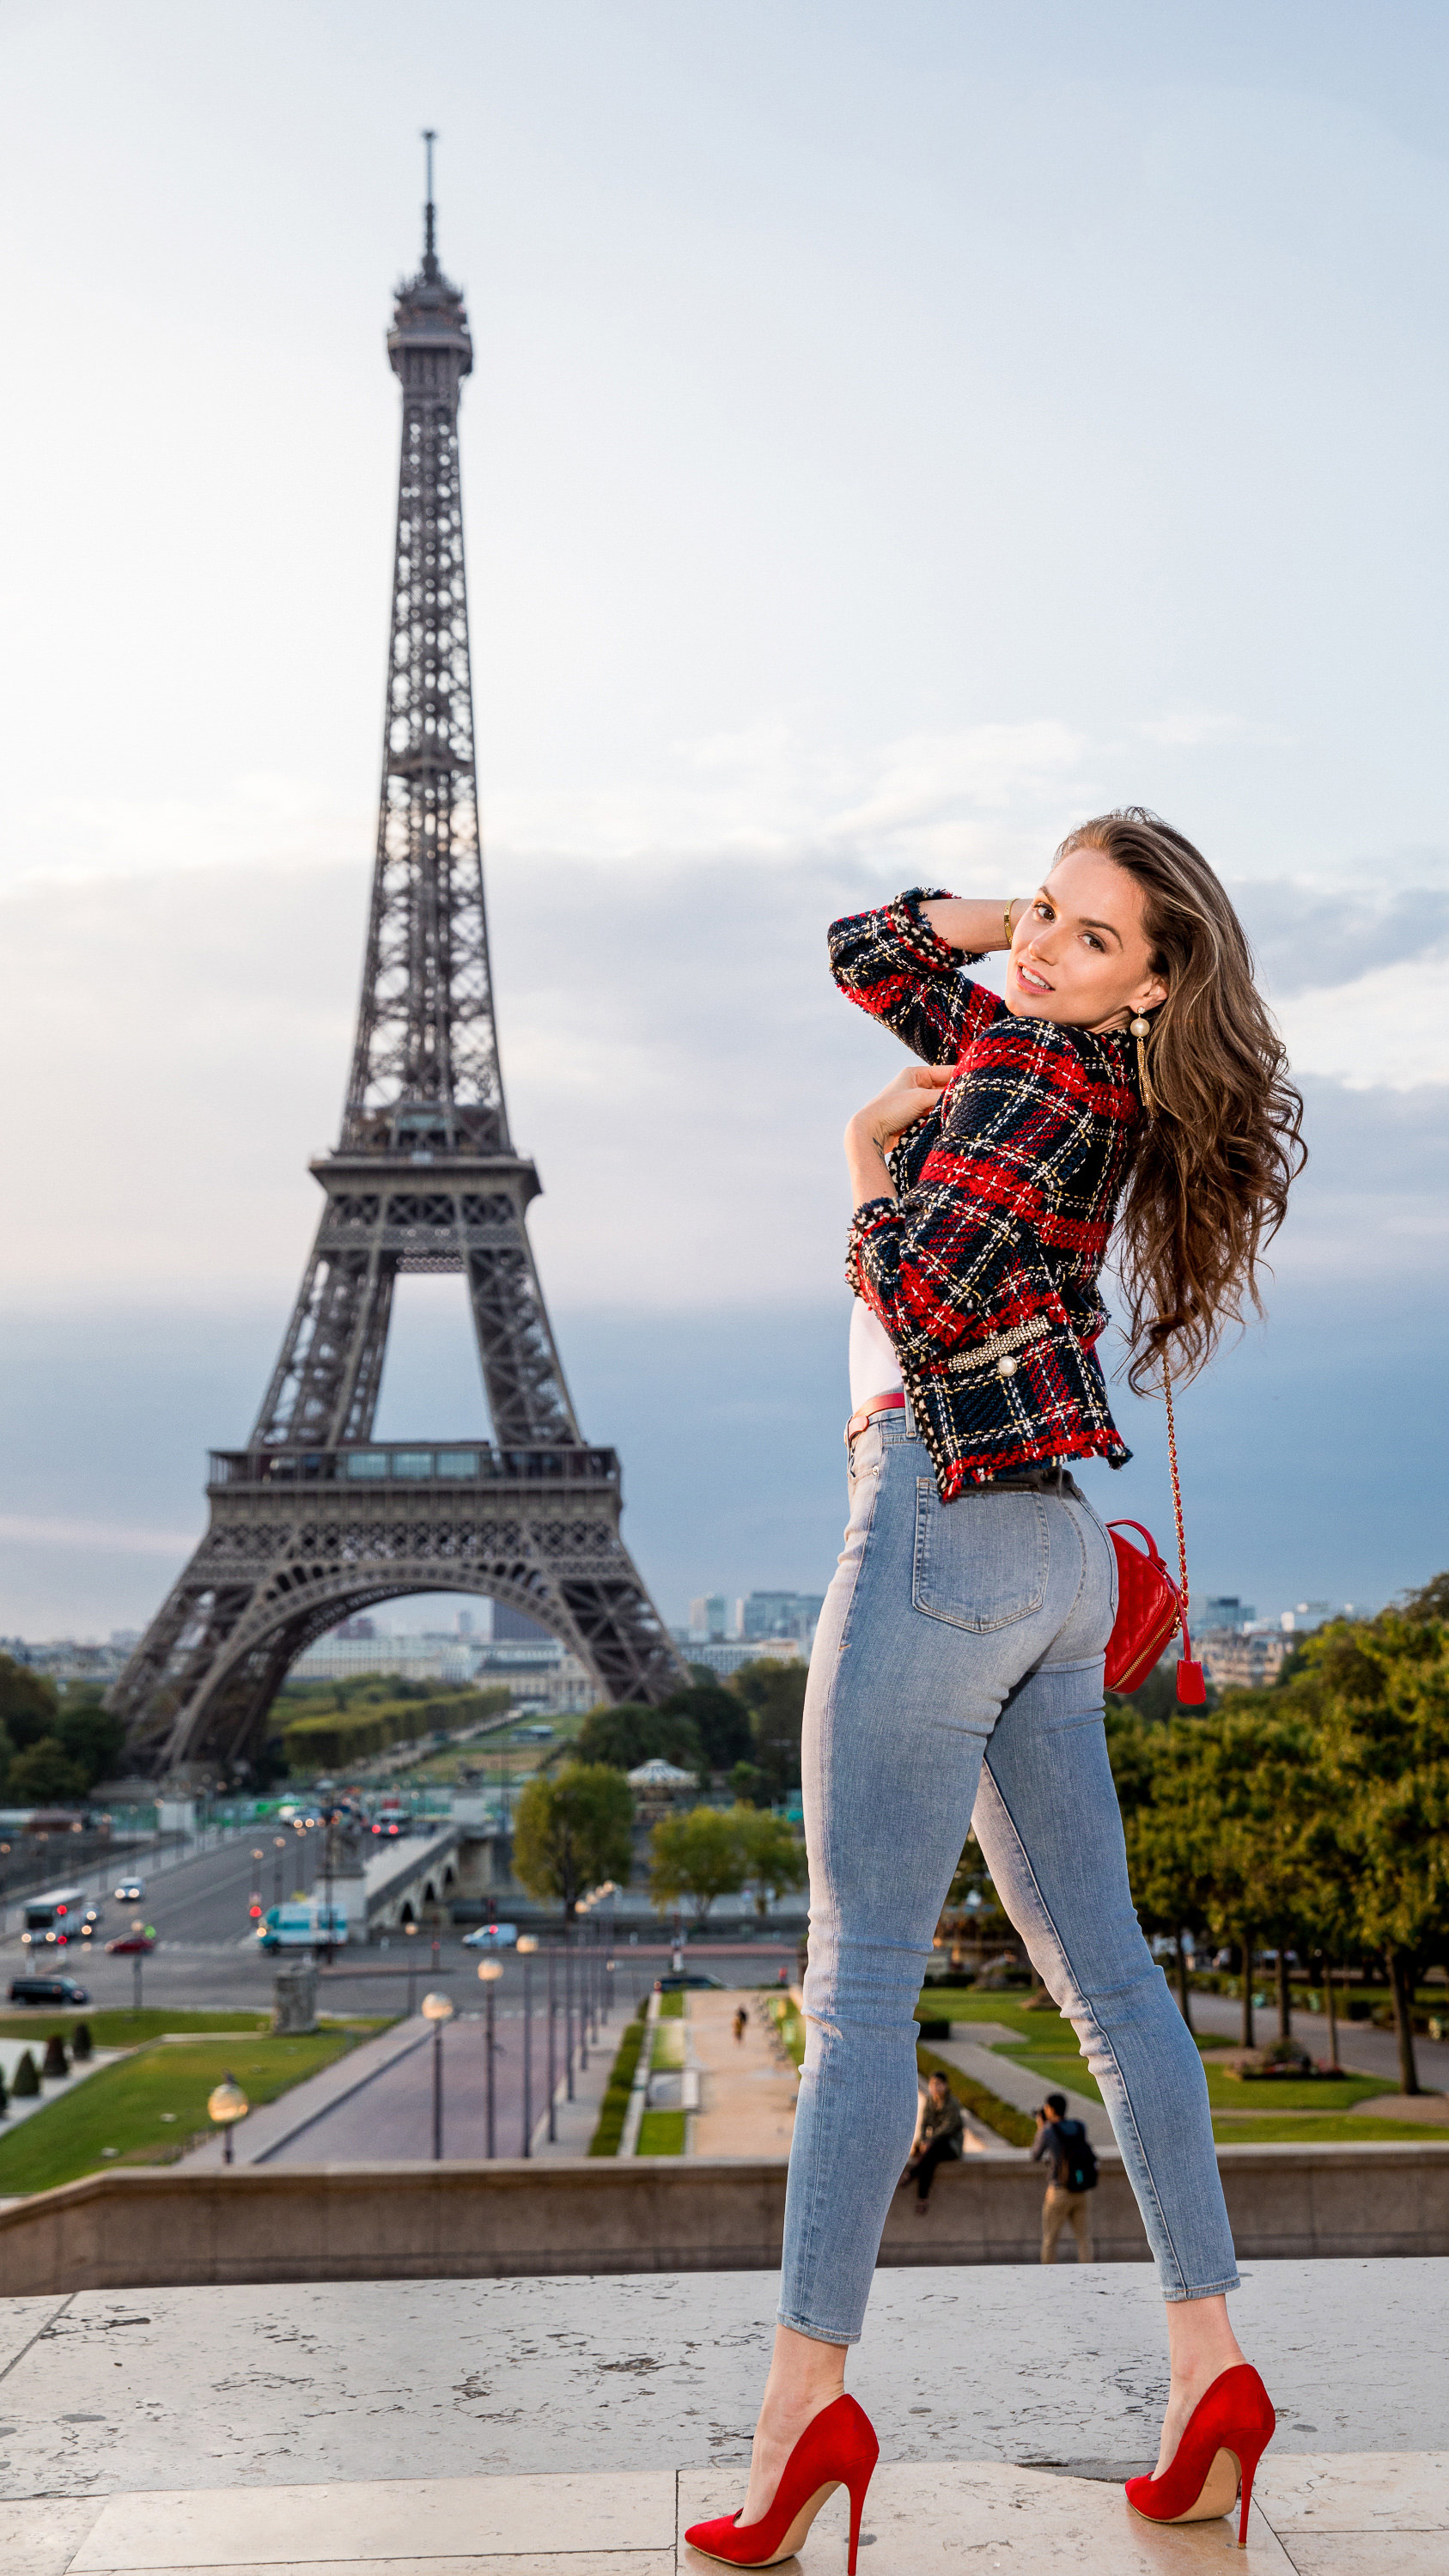 People 1687x2999 Tori Black women model pornstar women outdoors jeans red heels Eiffel Tower France Paris fashion landmark Europe American women Tushy portrait display